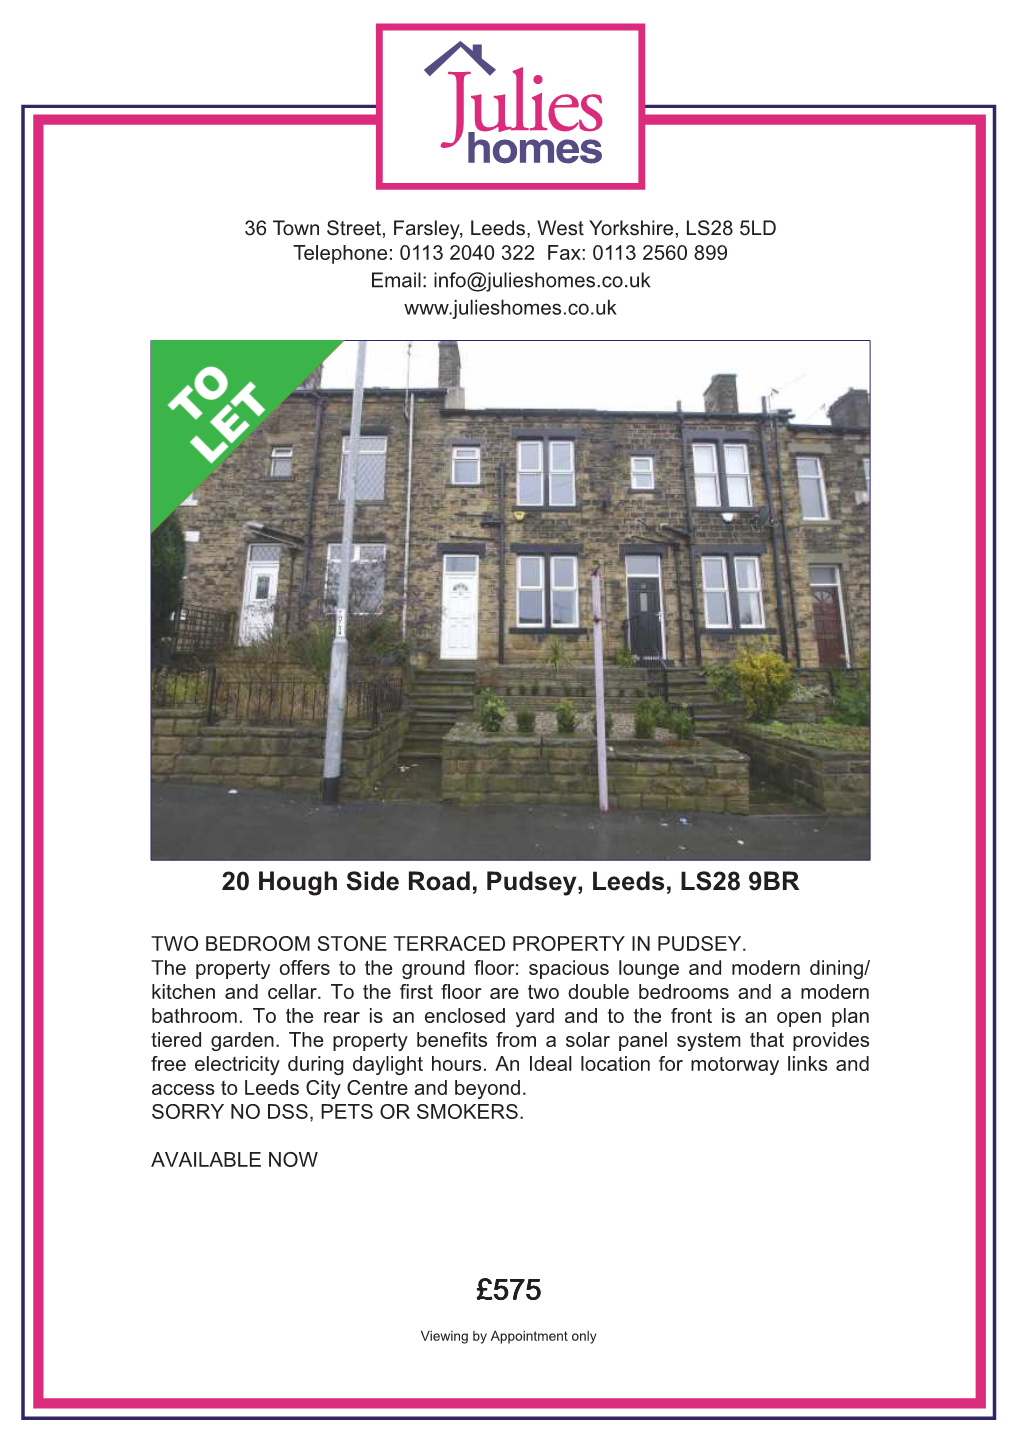 Homes 20 Hough Side Road, Pudsey, Leeds, LS28 9BR